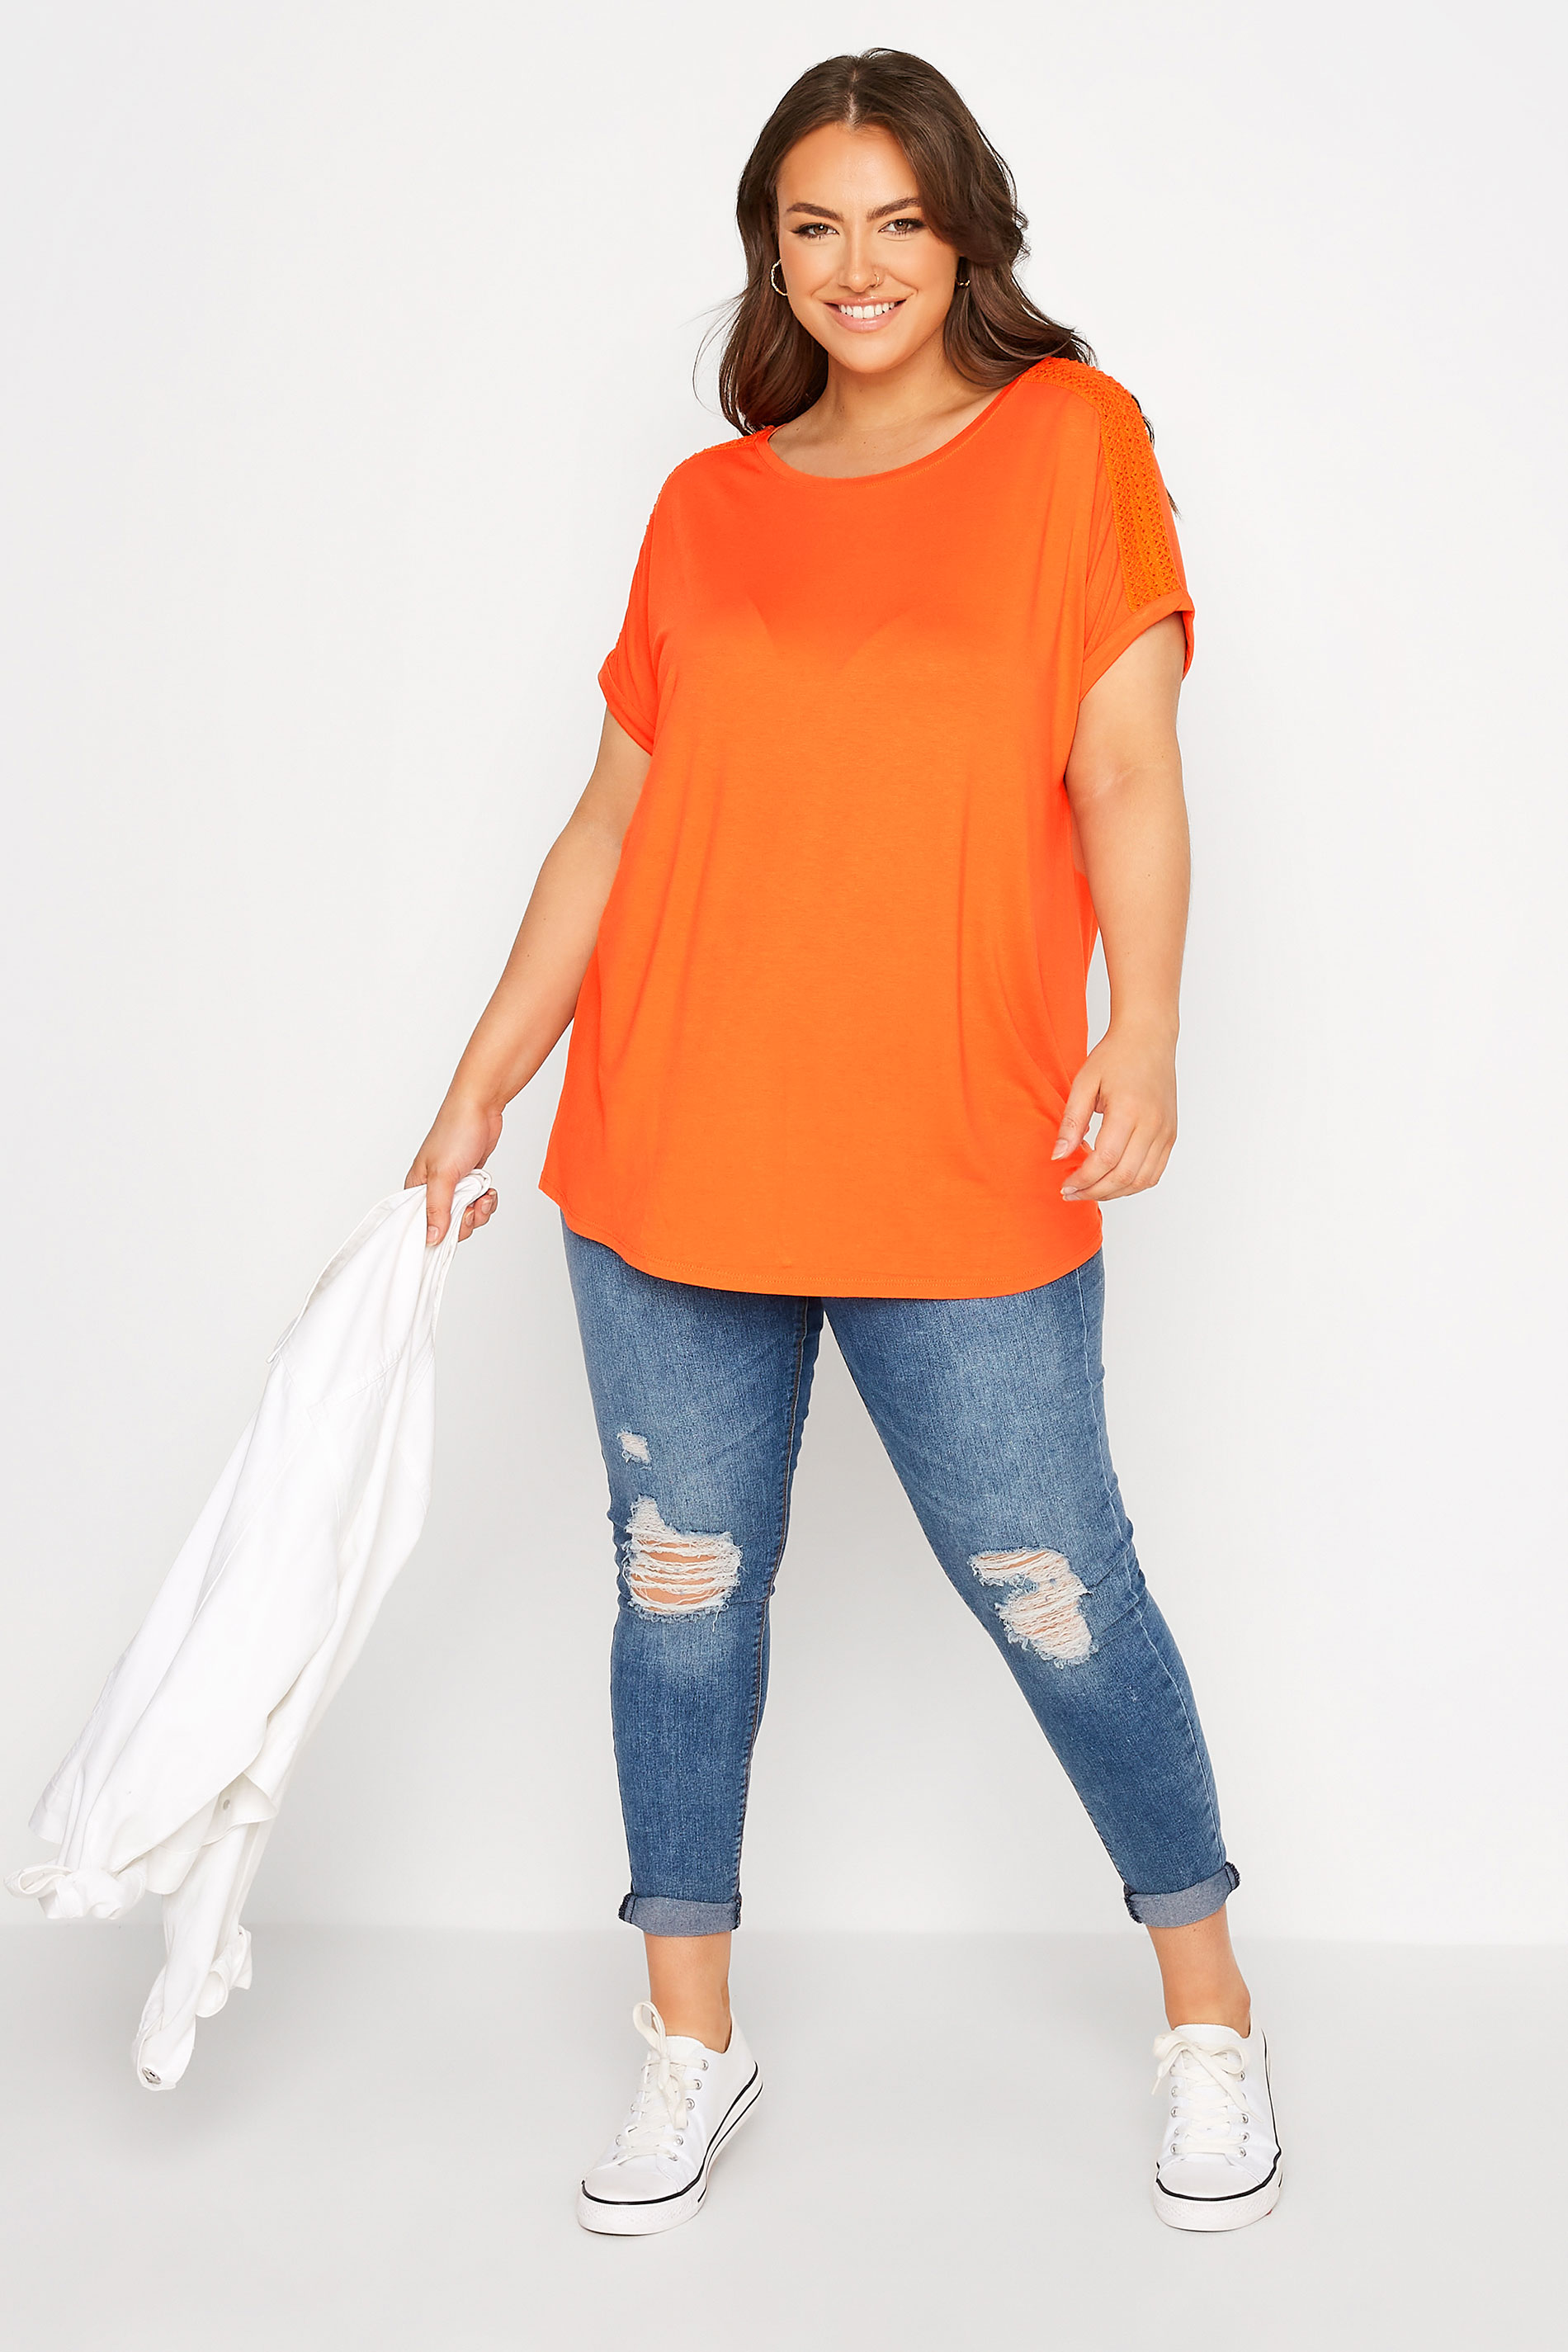 Grande taille  Tops Grande taille  T-Shirts | T-Shirt Orange Manches Courtes à Crochet - JV35642